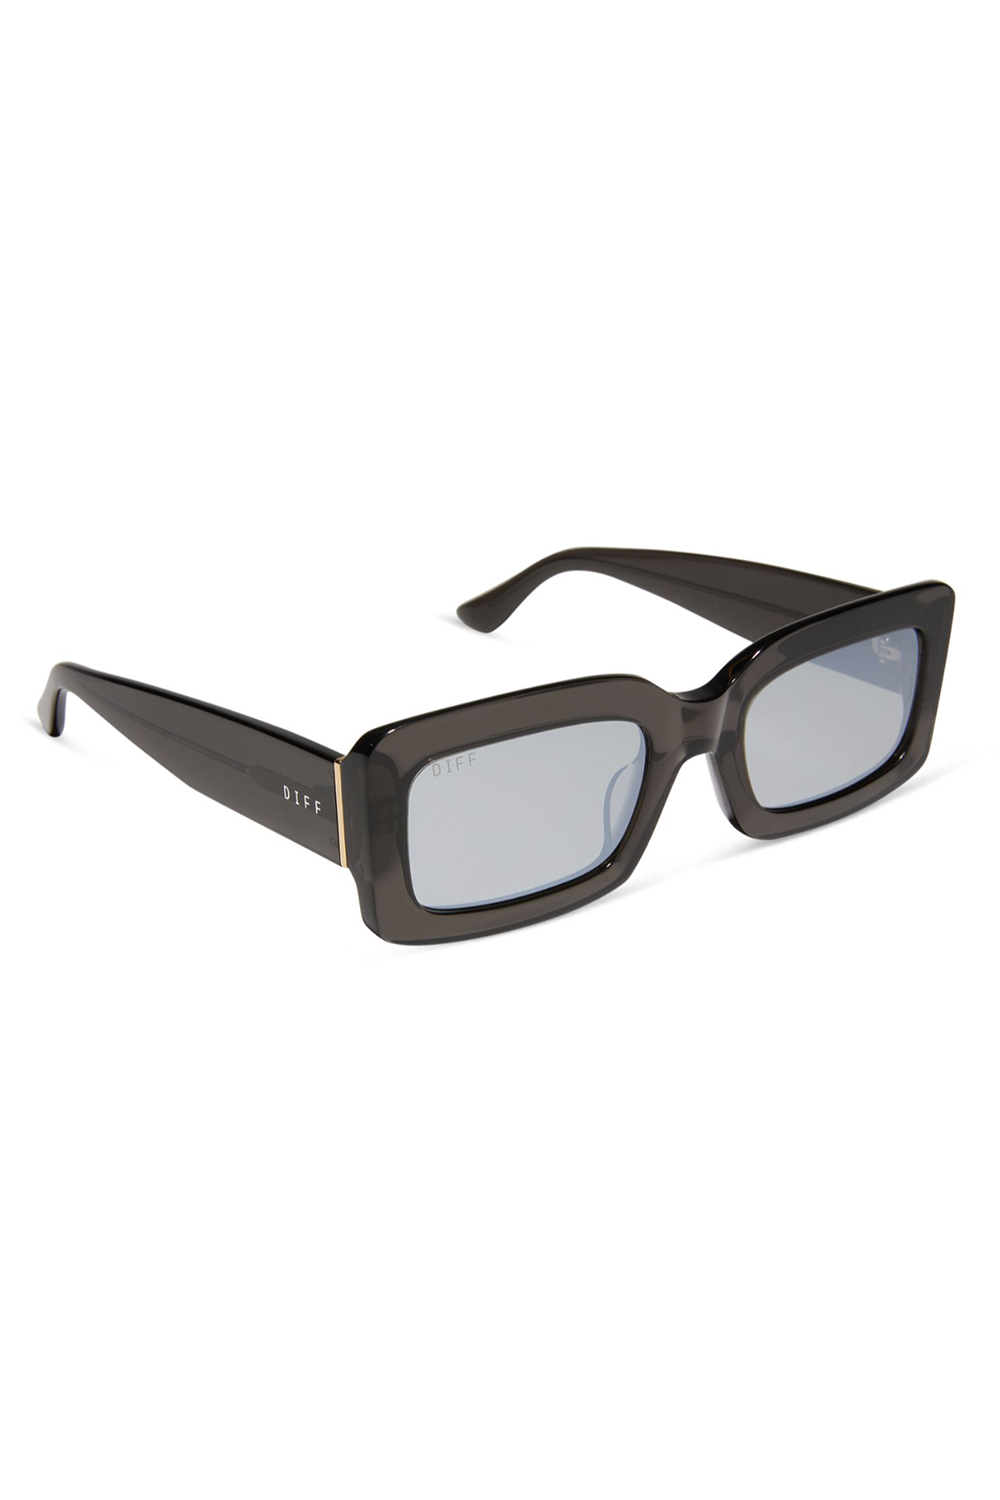 Indy Sunglasses - Smoke Crystal Grey